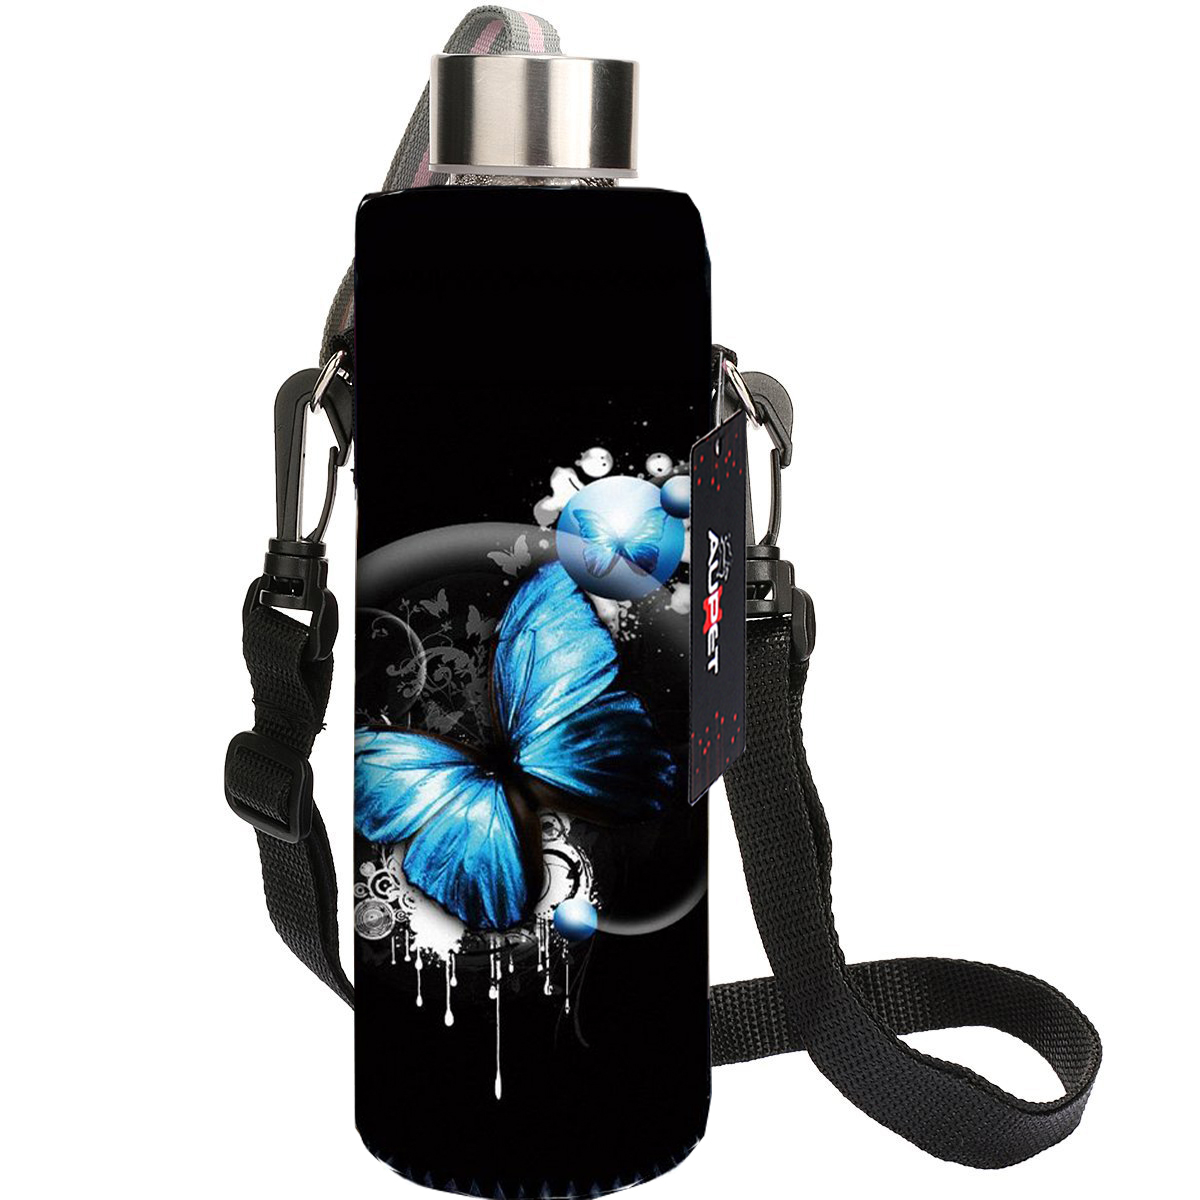 AUPET Water Bottle Carrier,Insulated Neoprene Water bottle Holder Bag Case Pouch Cover 1000ML or 750ML,Adjustable Shoulder Strap